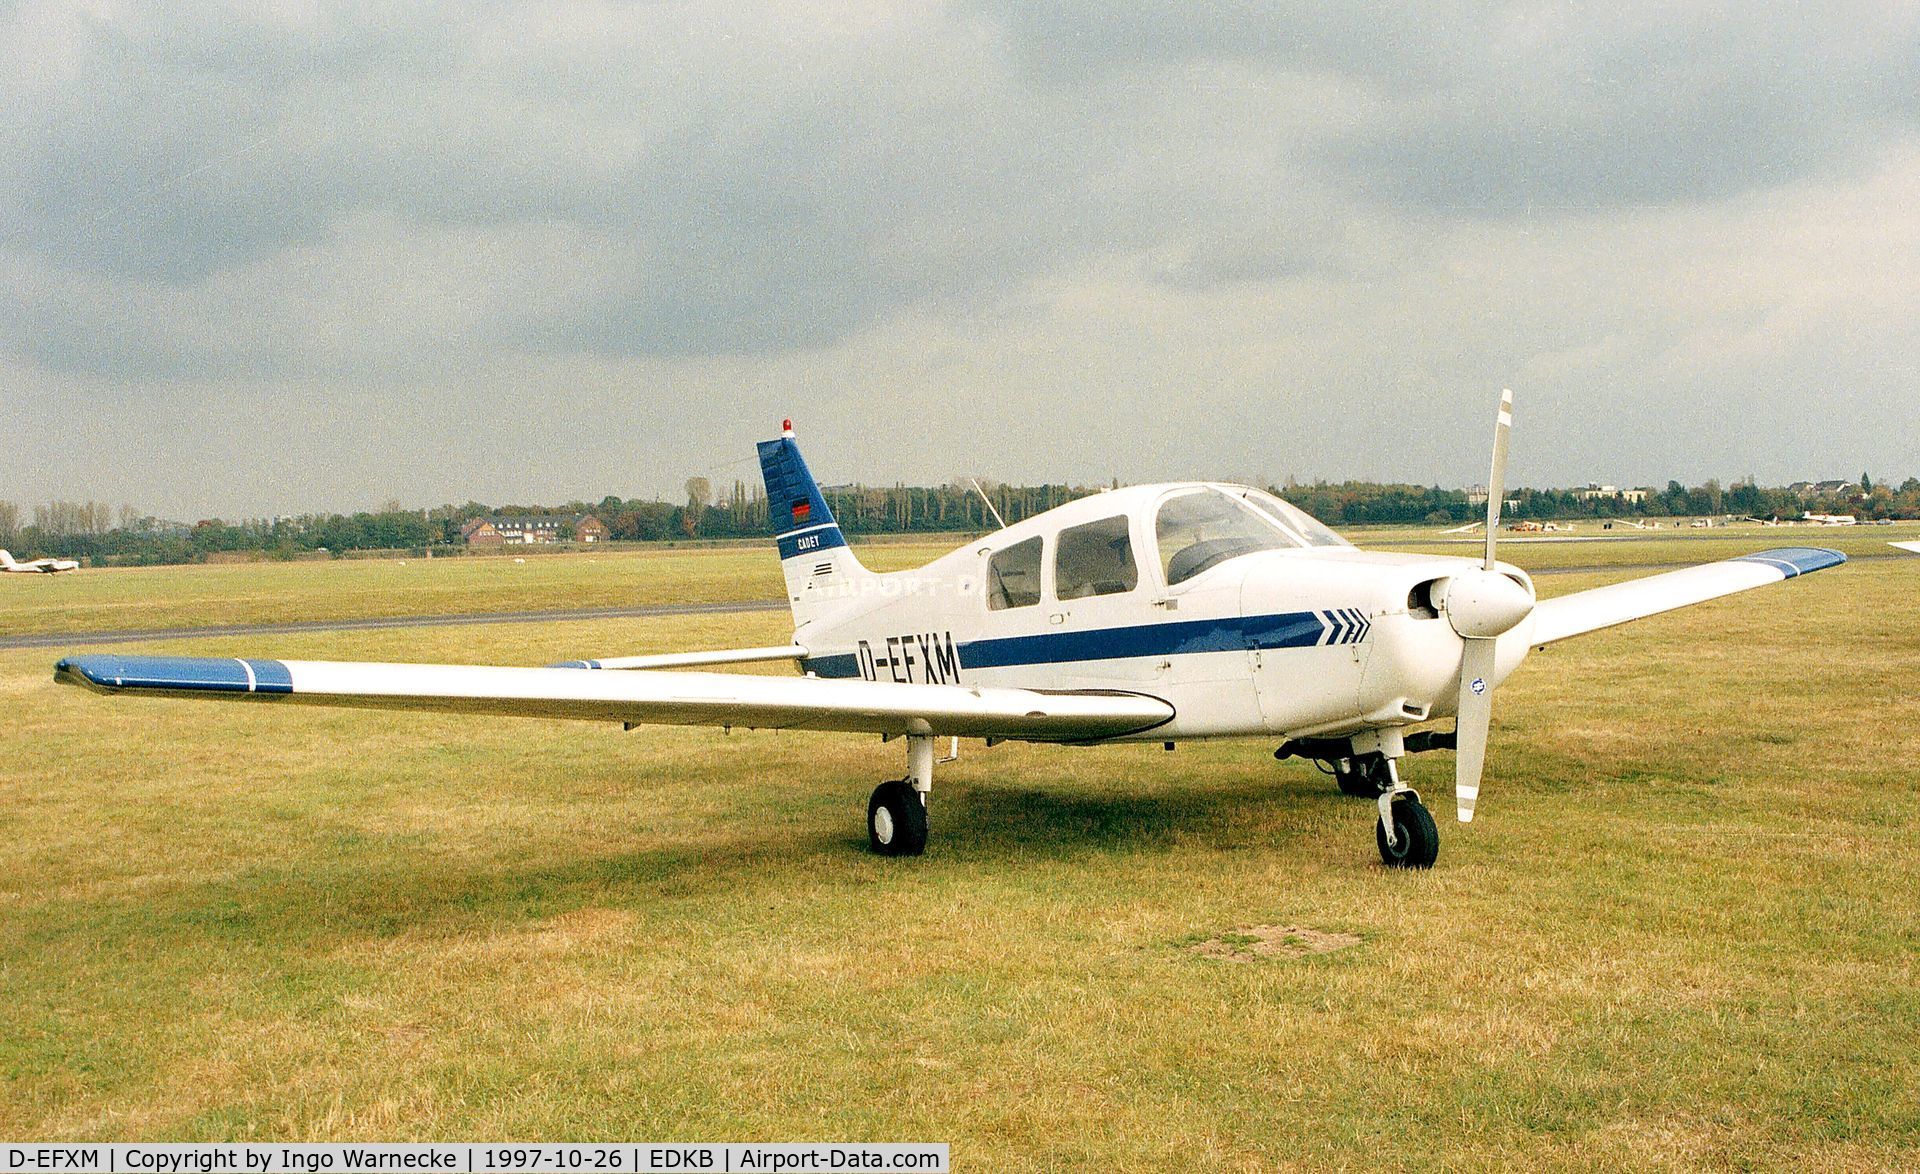 D-EFXM, 1989 Piper PA-28-161 Cadet C/N 2841128, Piper PA-28-161 Cadet at Bonn-Hangelar airfield